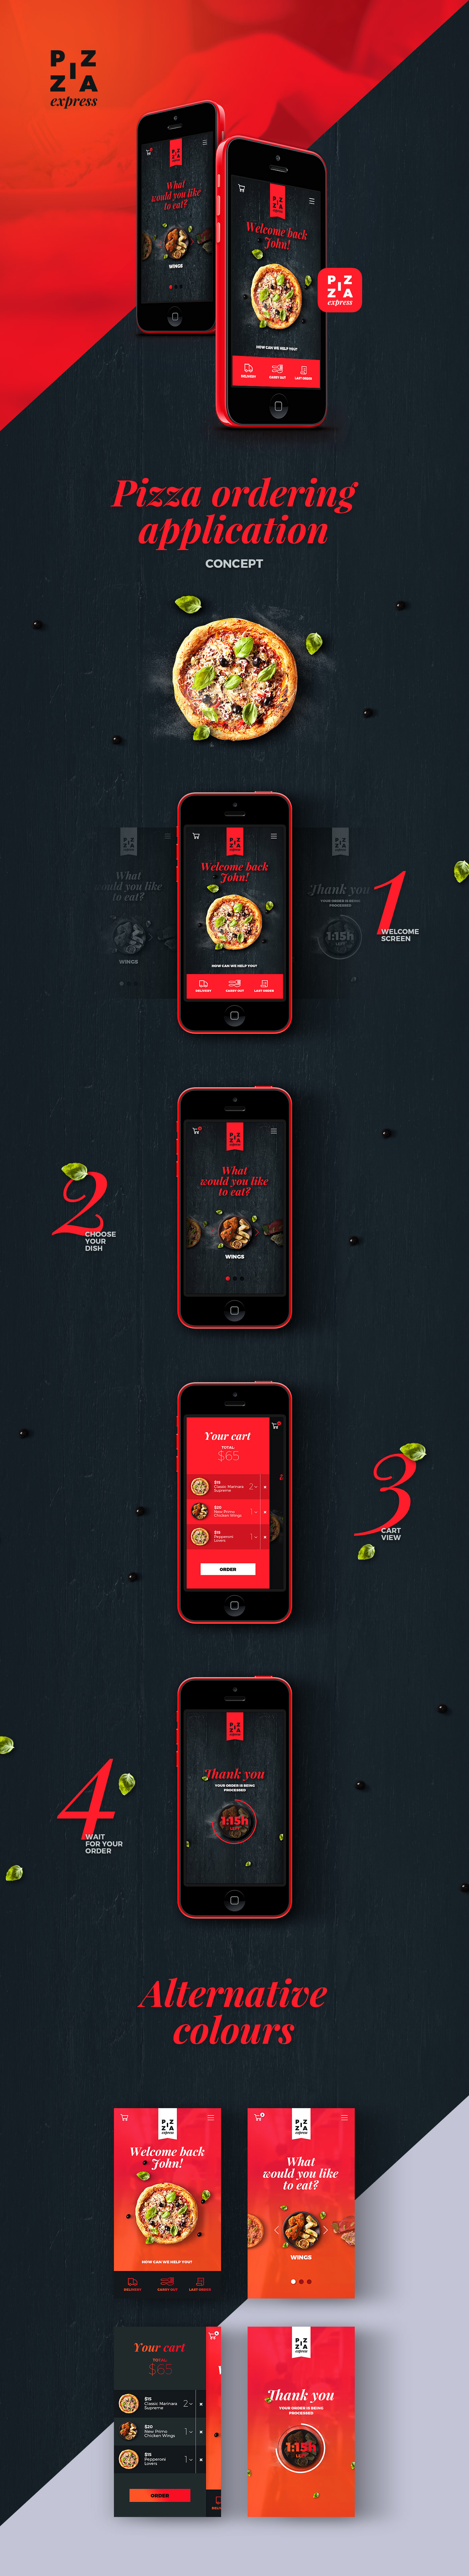 lluck jackiewicz mobile Webdesign app Pizza